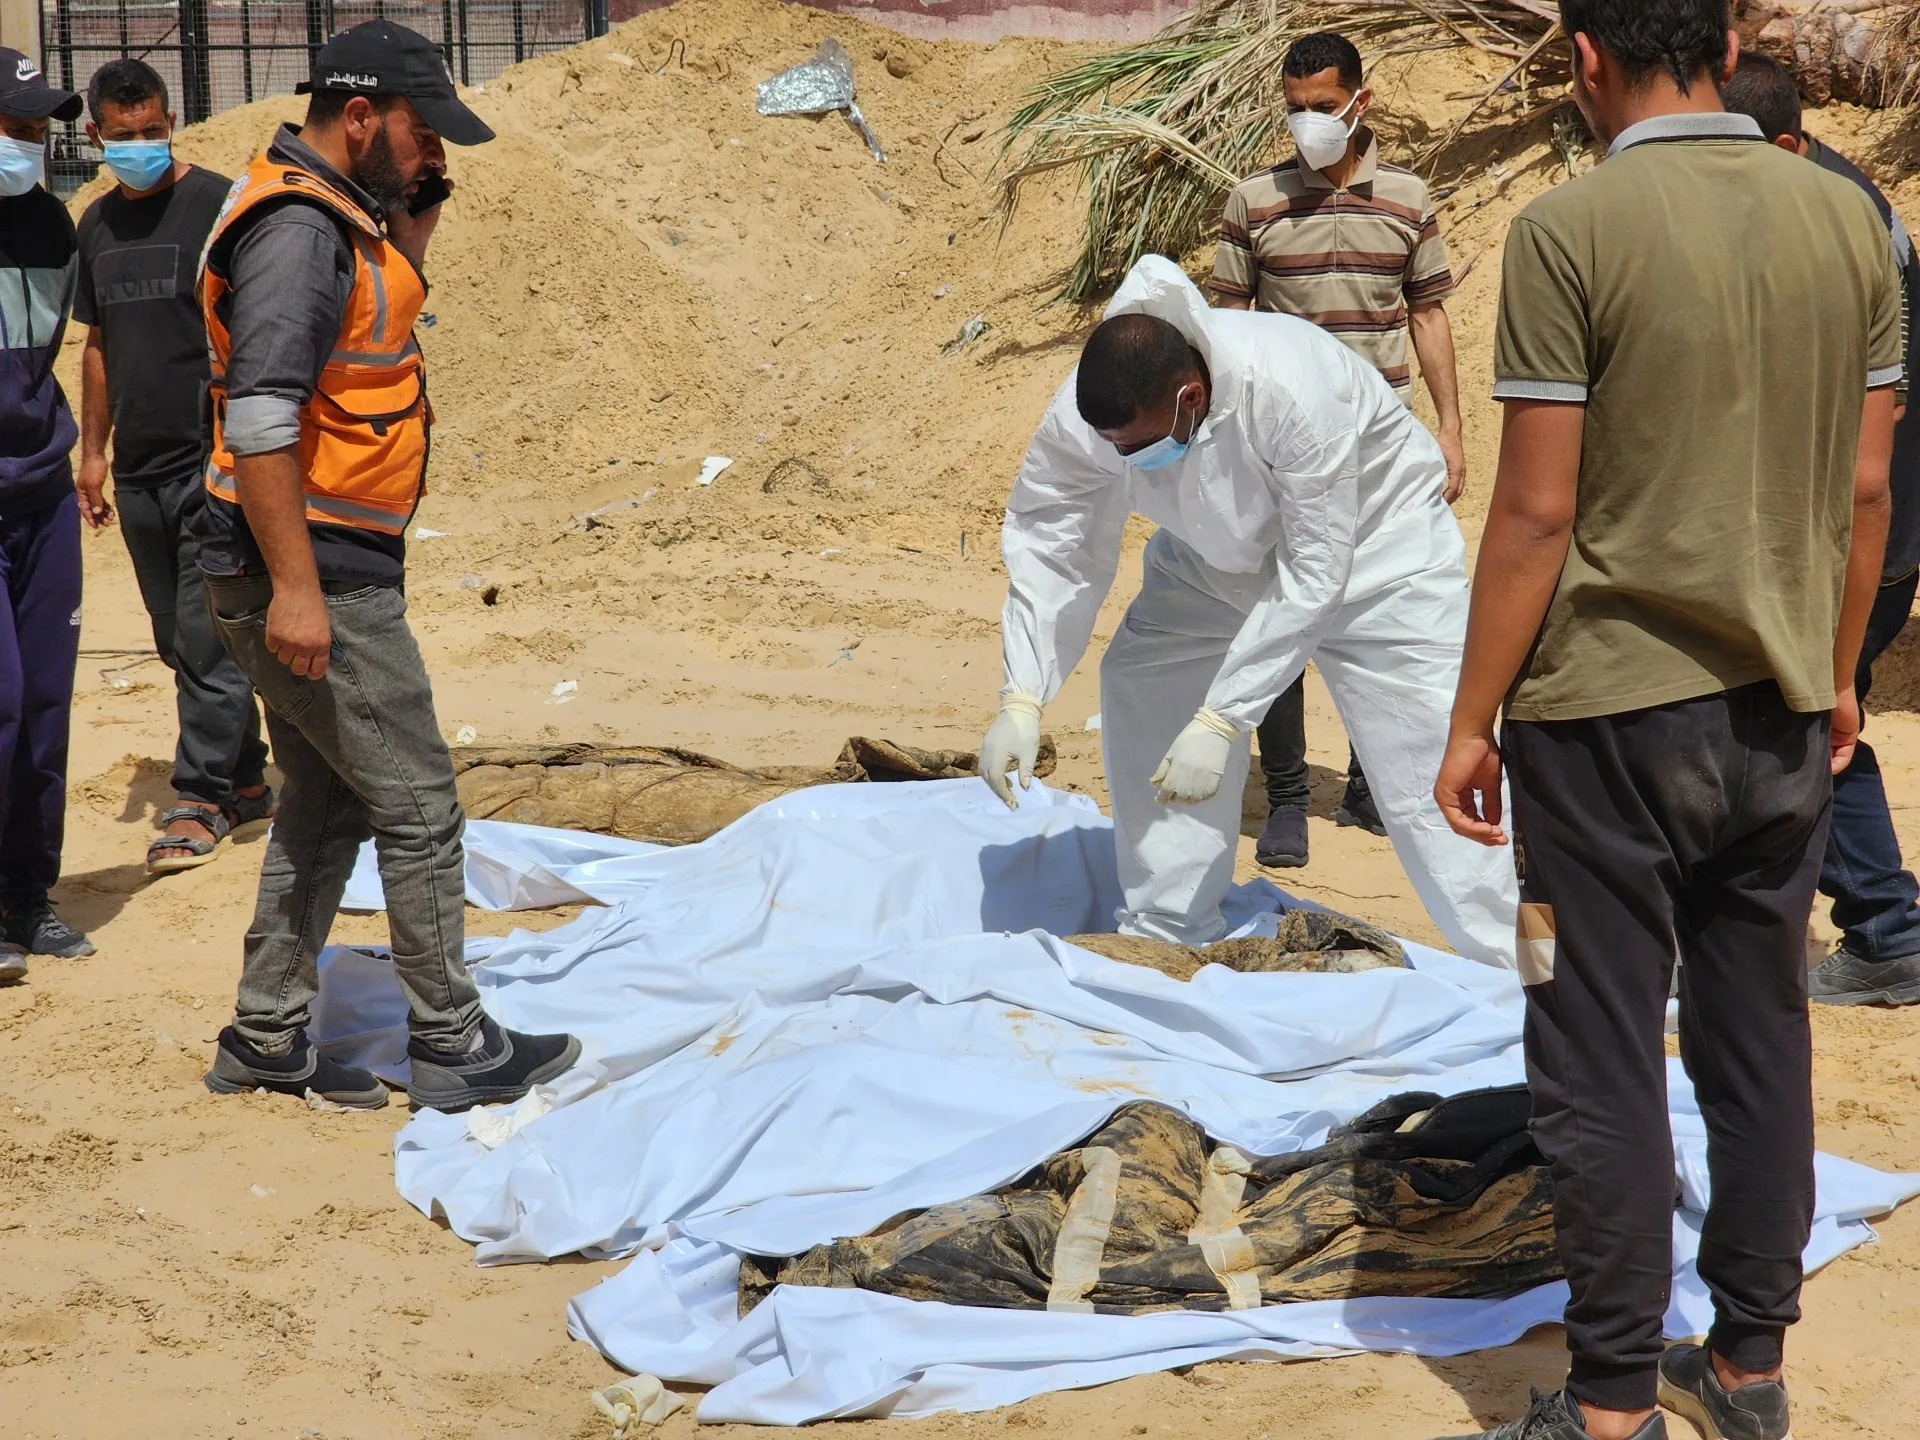 Al-Shifa, Nasser hospital staff questioned by ICC prosecutors: Report | Israel War on Gaza News